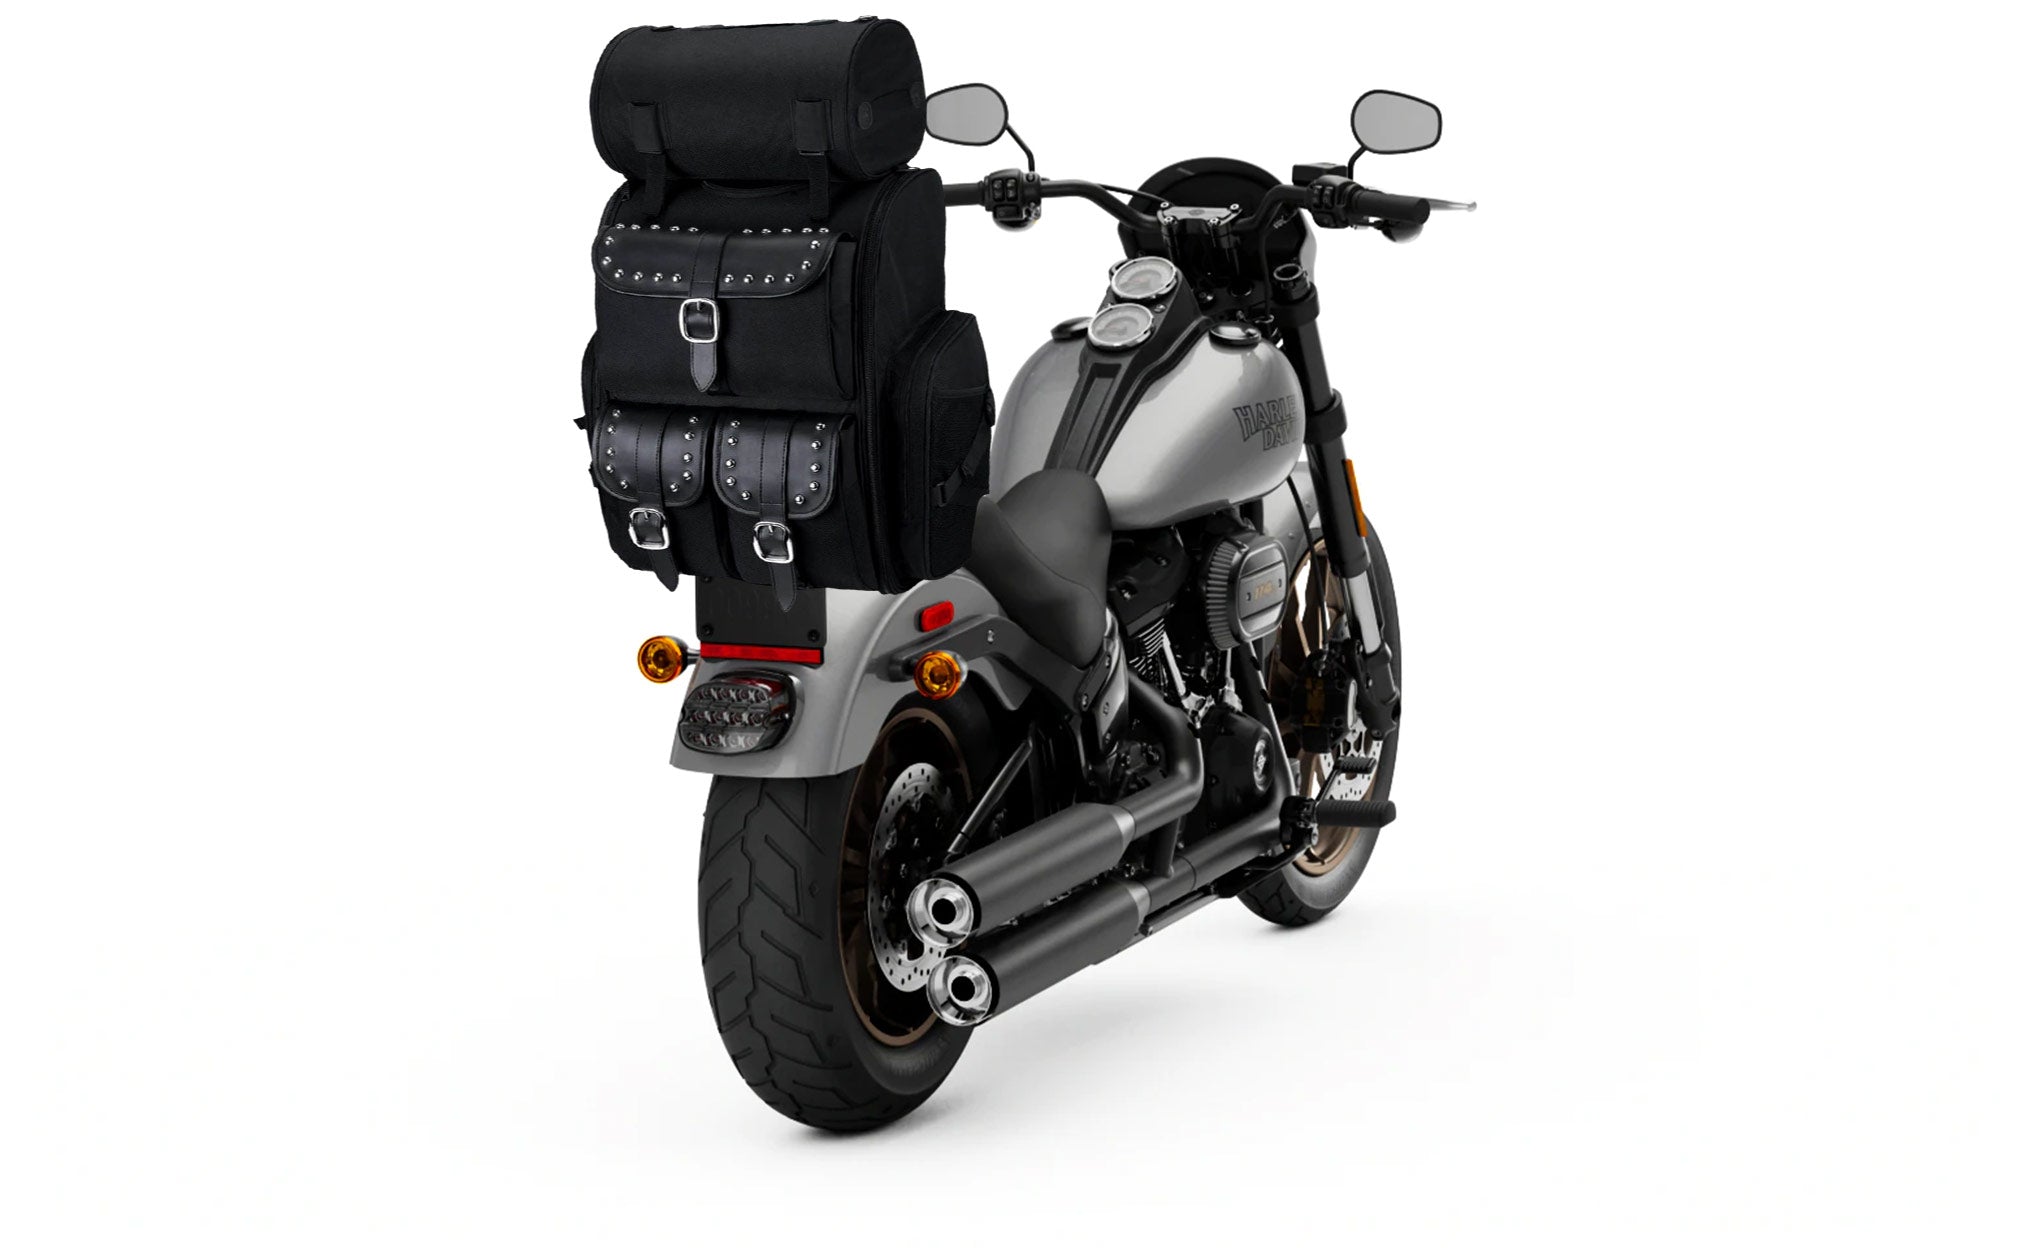 Viking Highway Extra Large Studded Motorcycle Sissy Bar Bag for Harley Davidson Bag on Bike View @expand